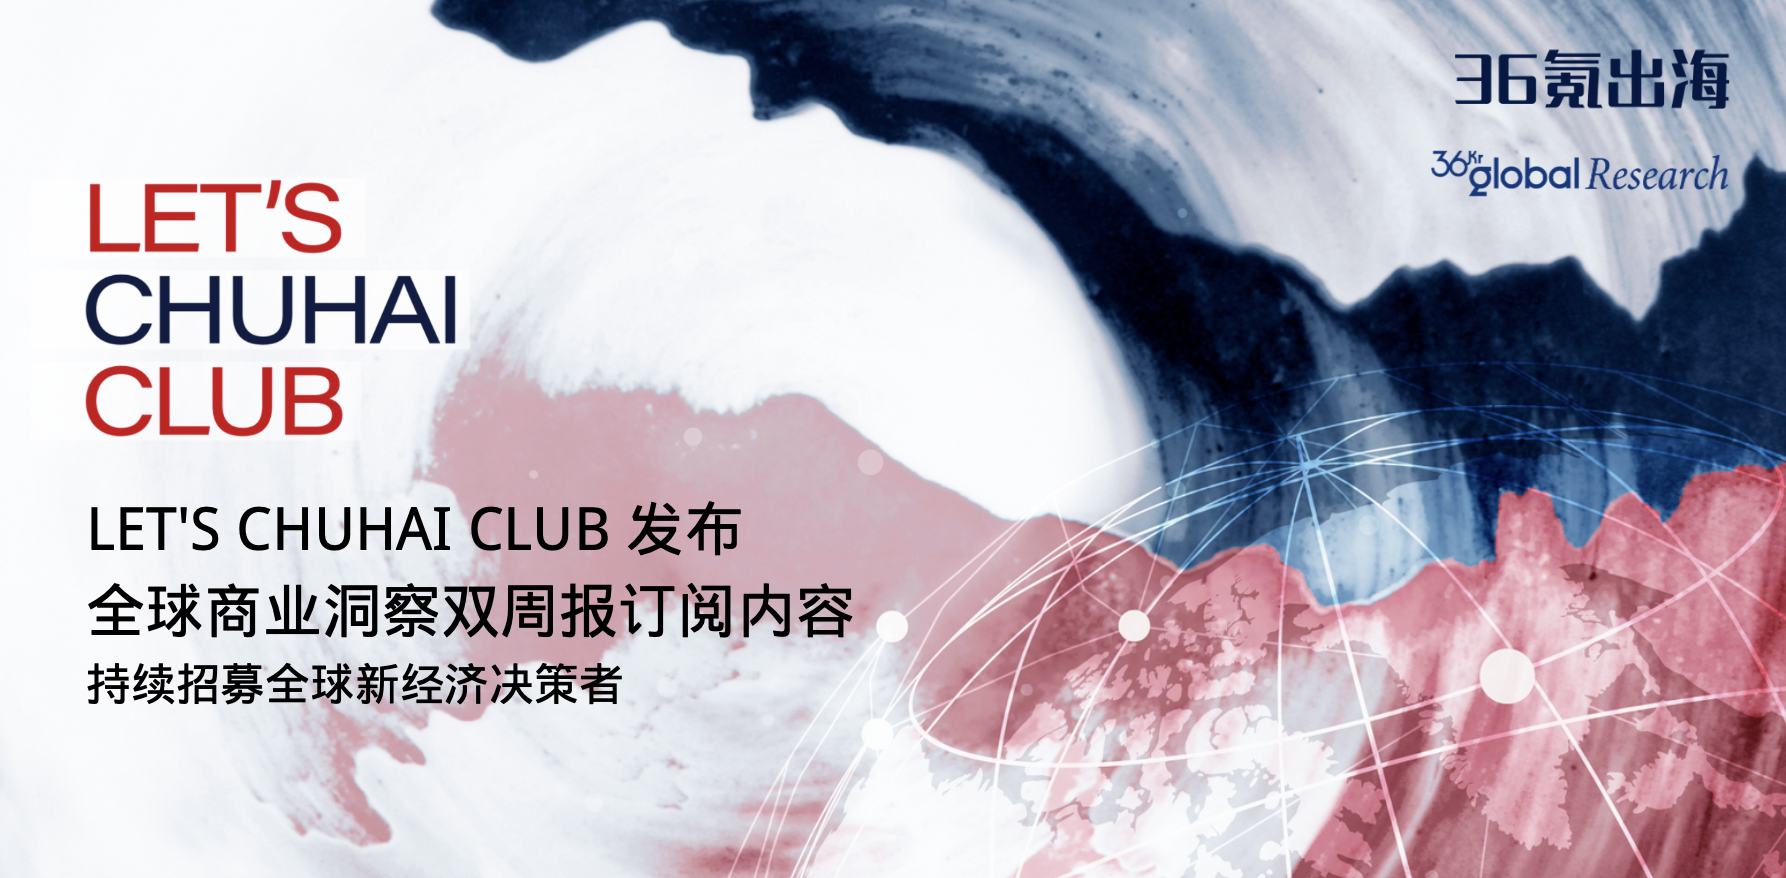 LET'S CHUHAI CLUB 会员募集超过600名全球新经济决策者